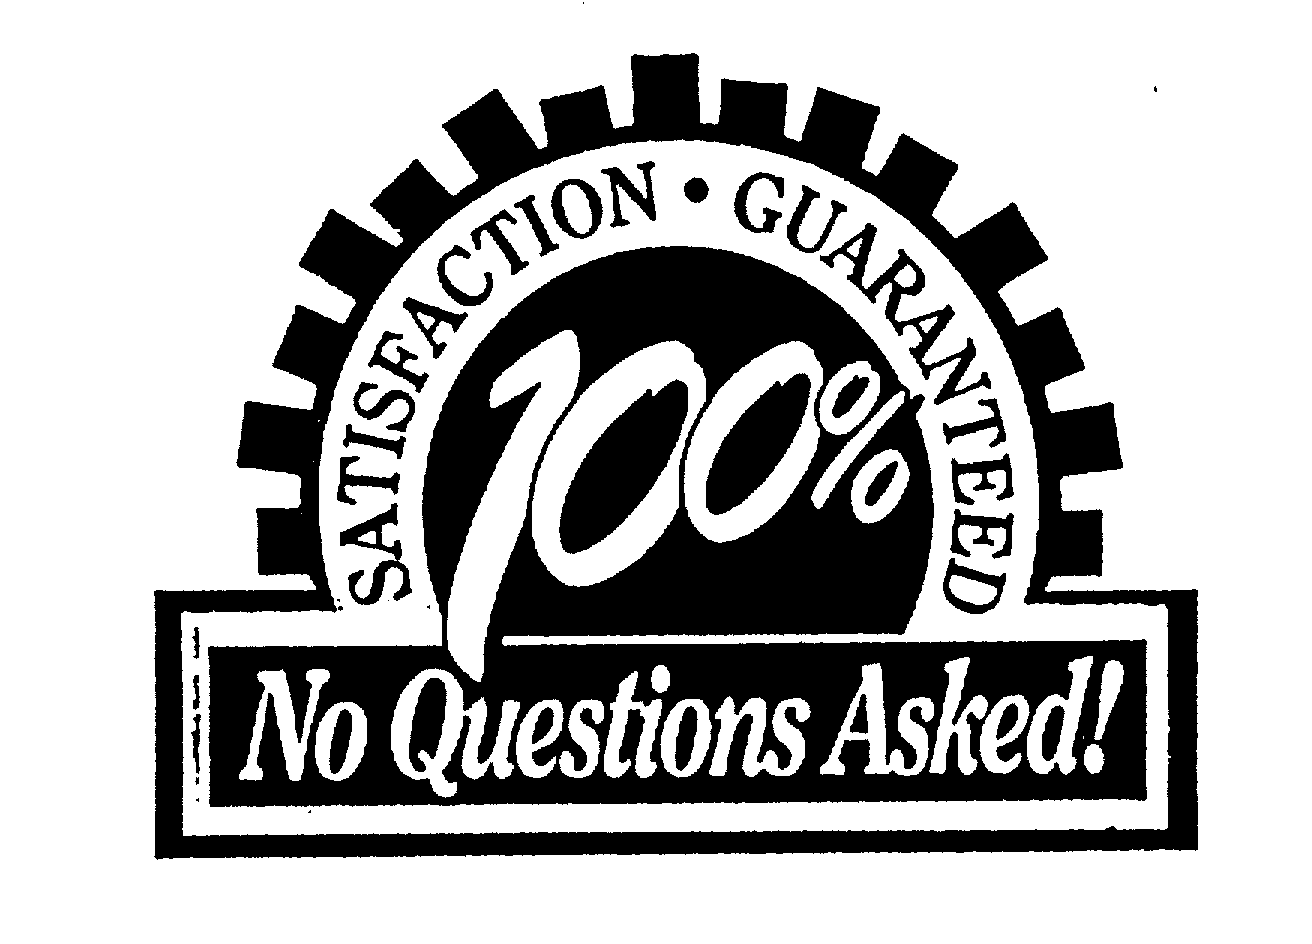  SATISFACTION GUARANTEED 100% NO QUESTIONS ASKED!